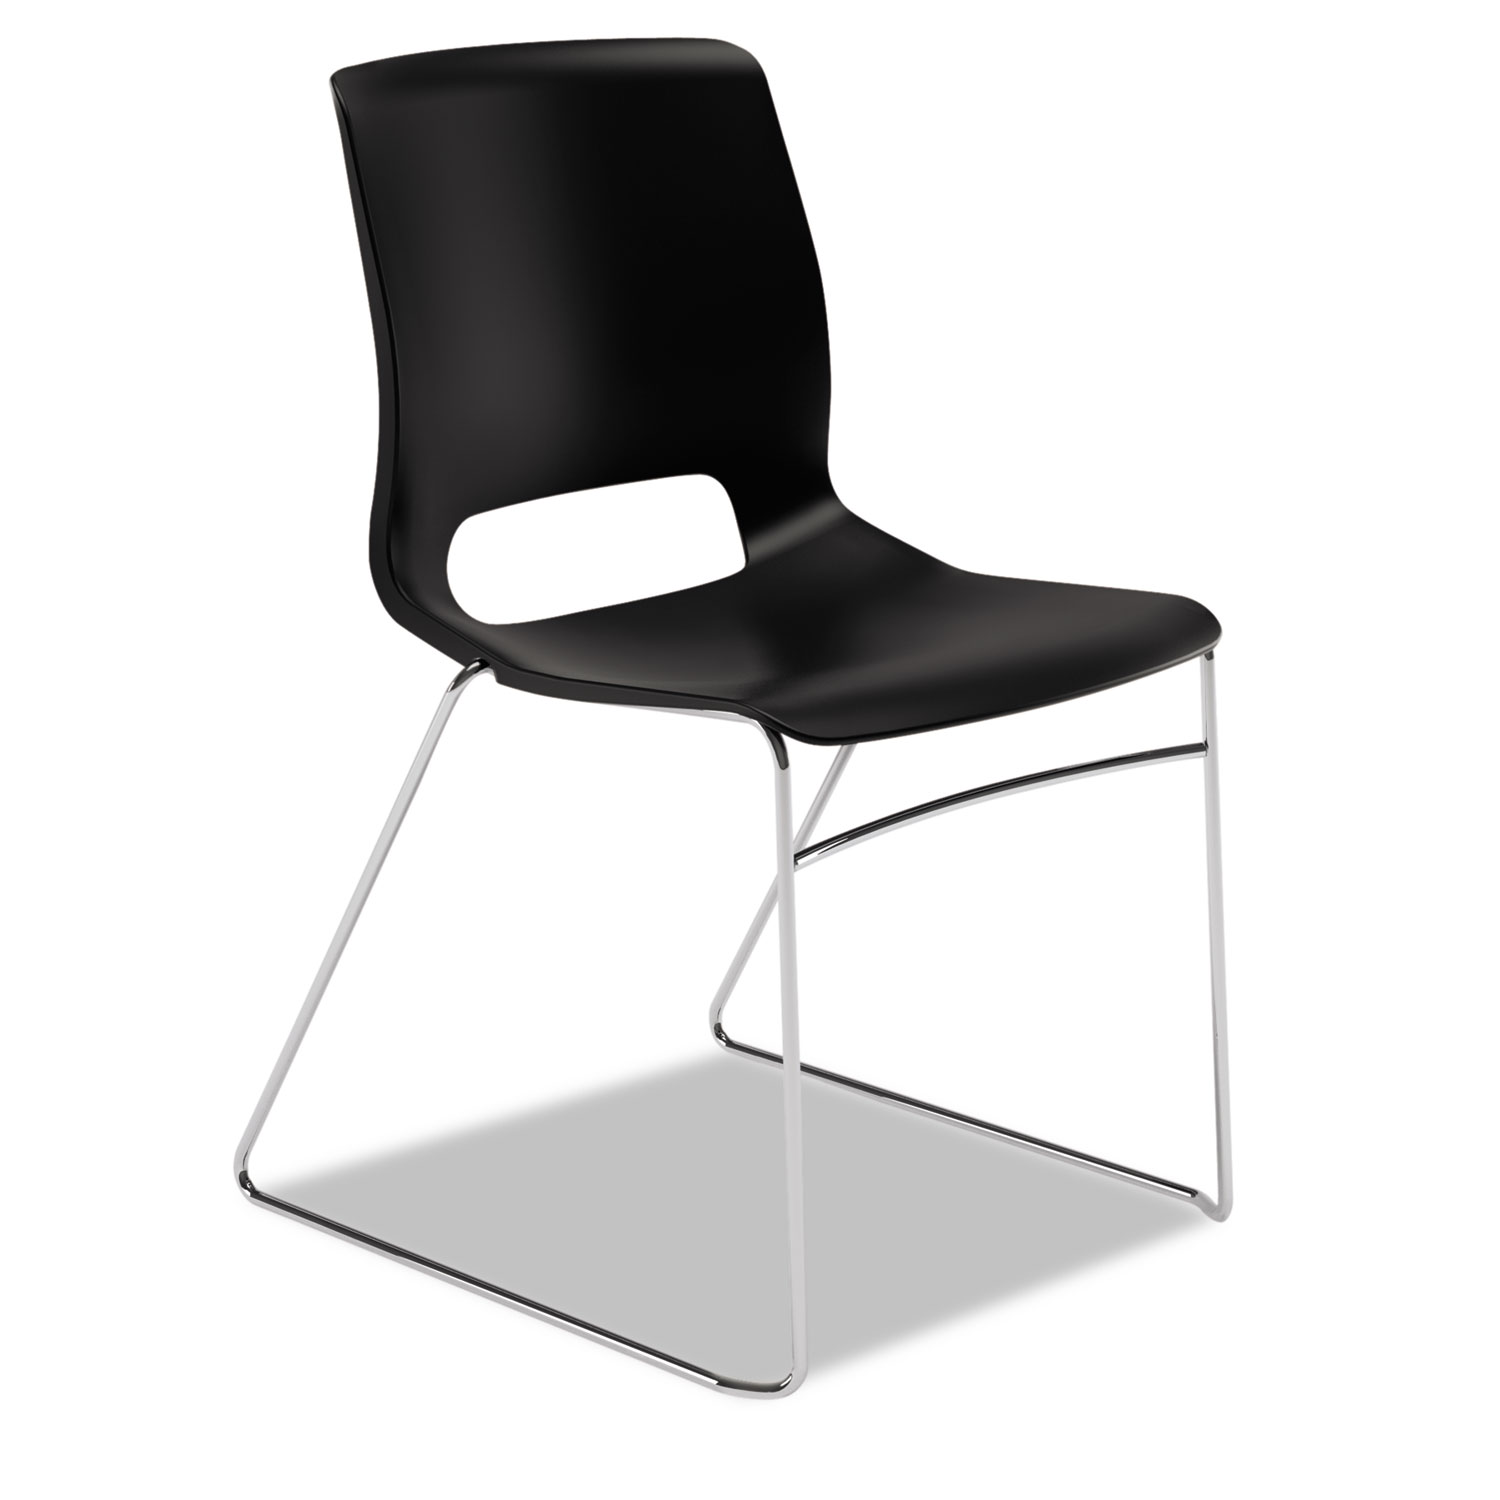  HON HMS1.N.ON.Y Motivate High-Density Stacking Chair, Onyx Seat/Black Back, Chrome Base, 4/Carton (HONMS101ON) 